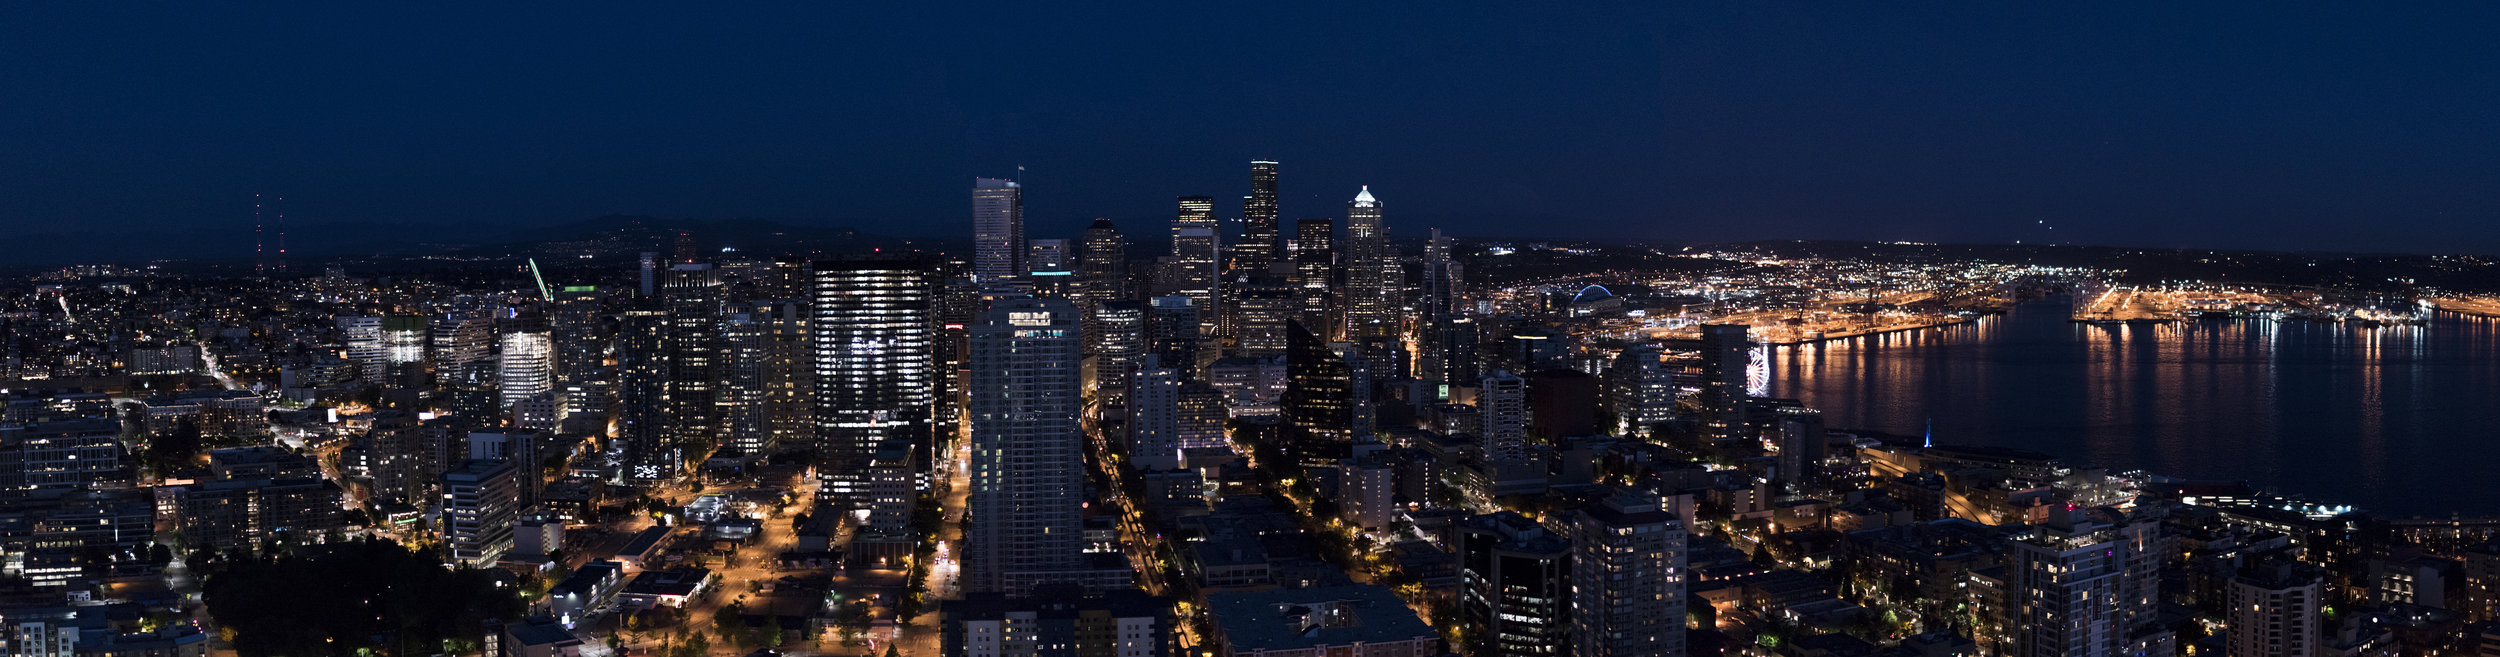 Seattle Skyline-1.jpg